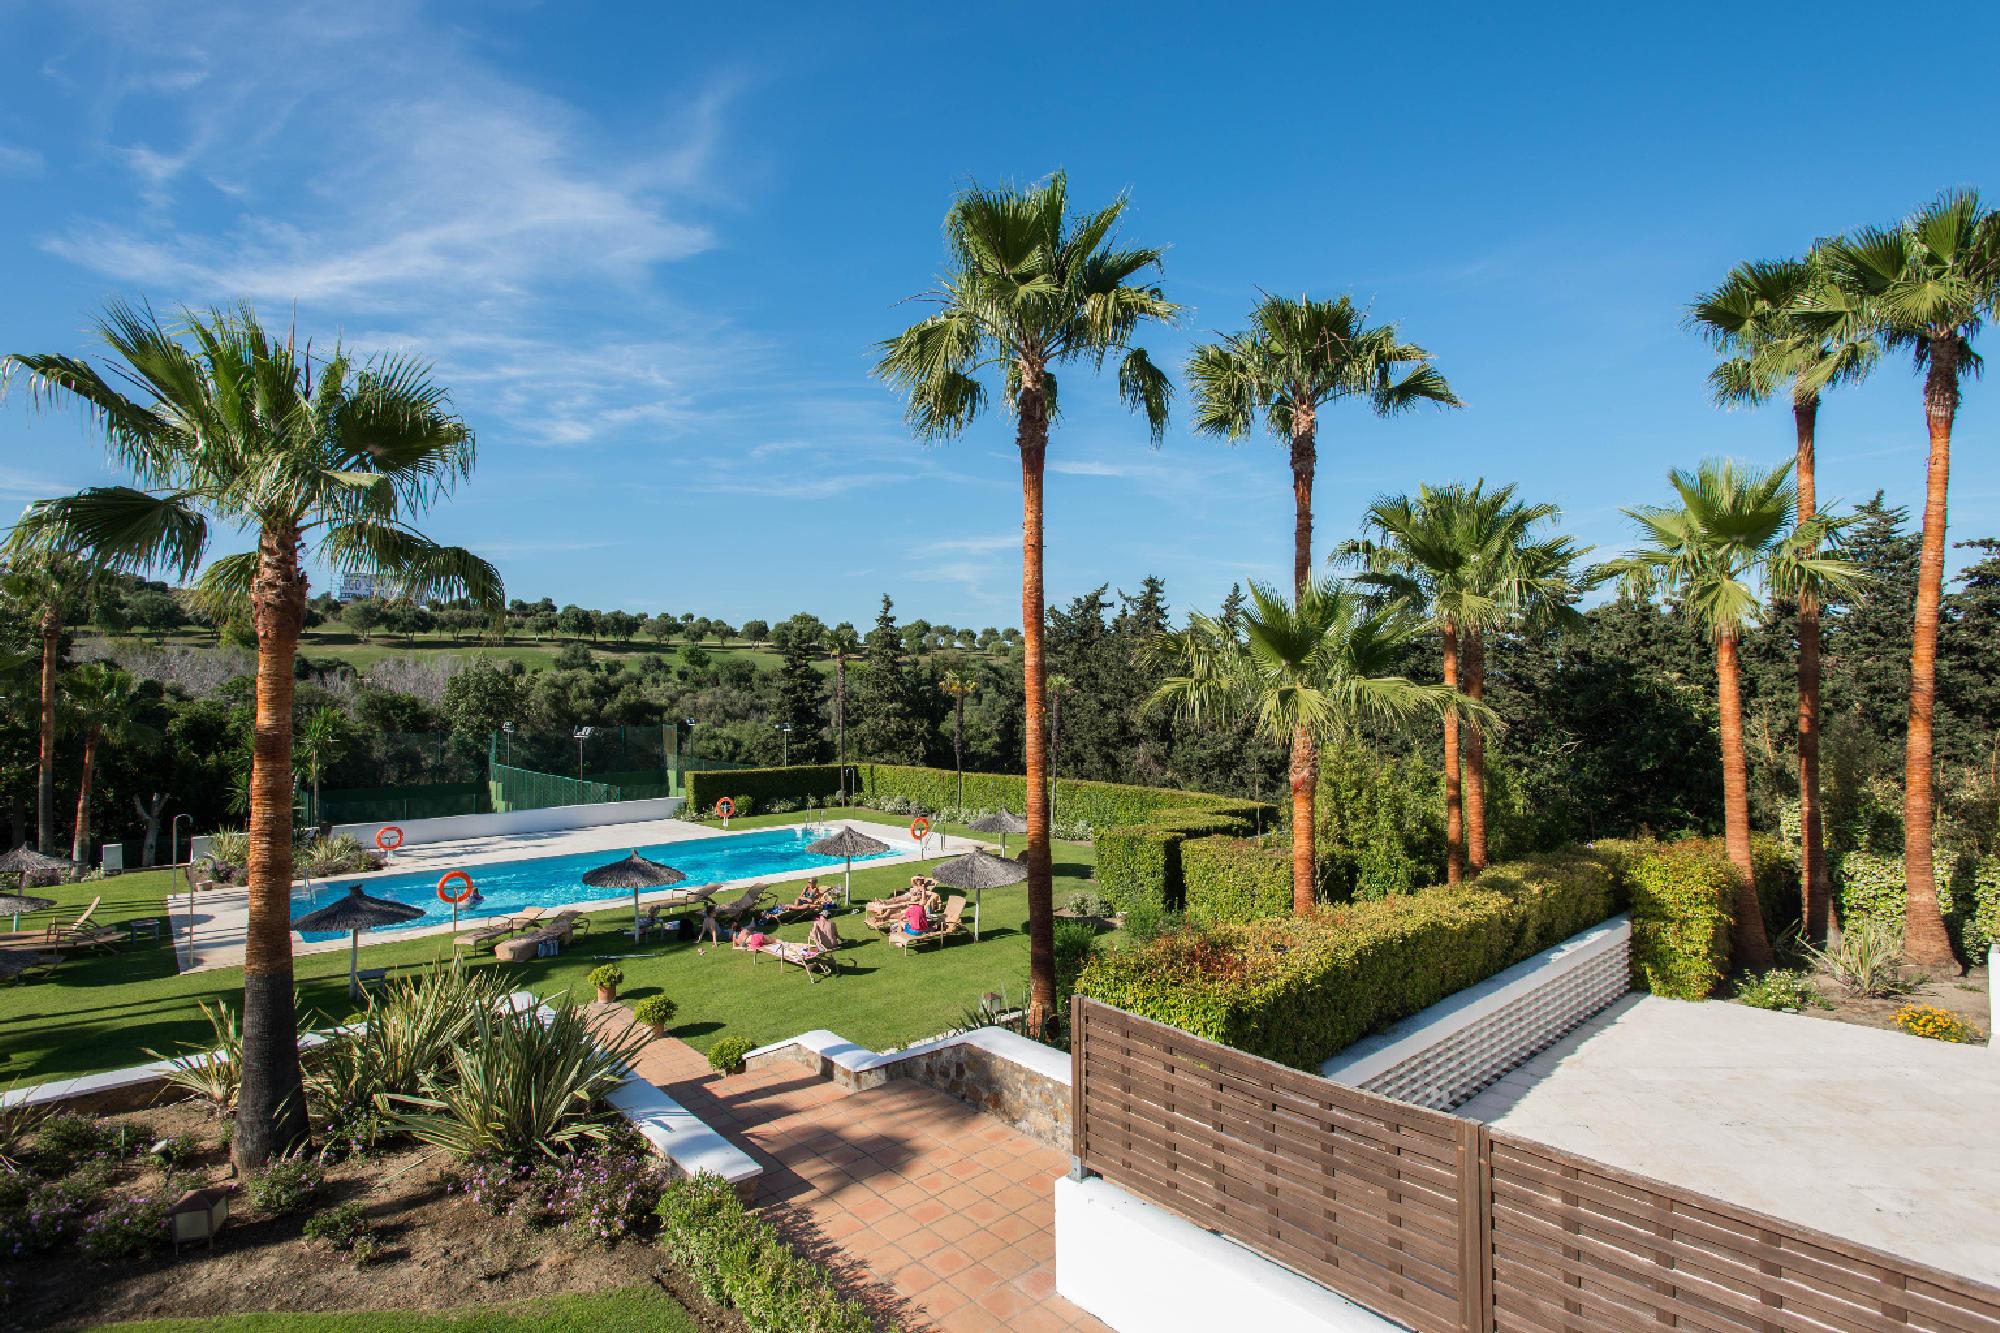 The NH Sotogrande Hotel's picturesque main pool in sensational Costa Del Sol.